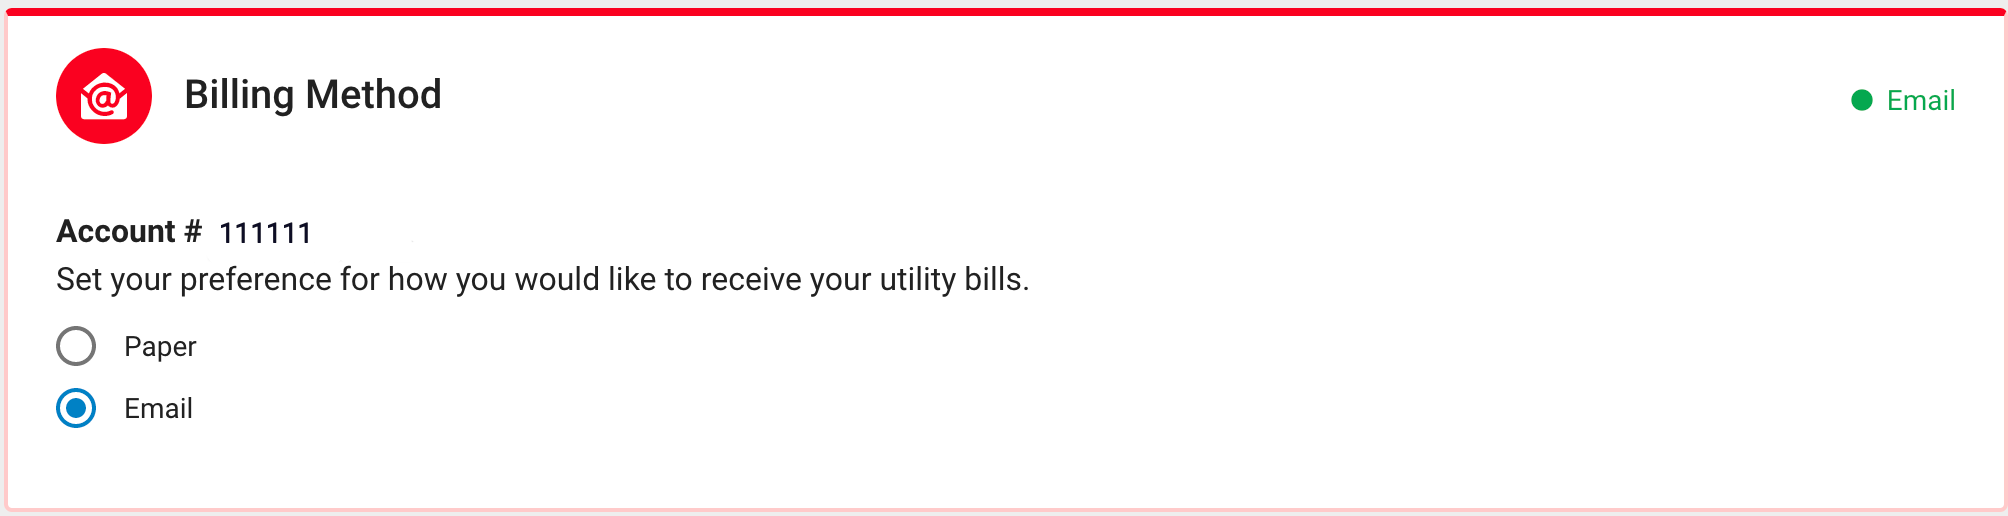 utility billing method